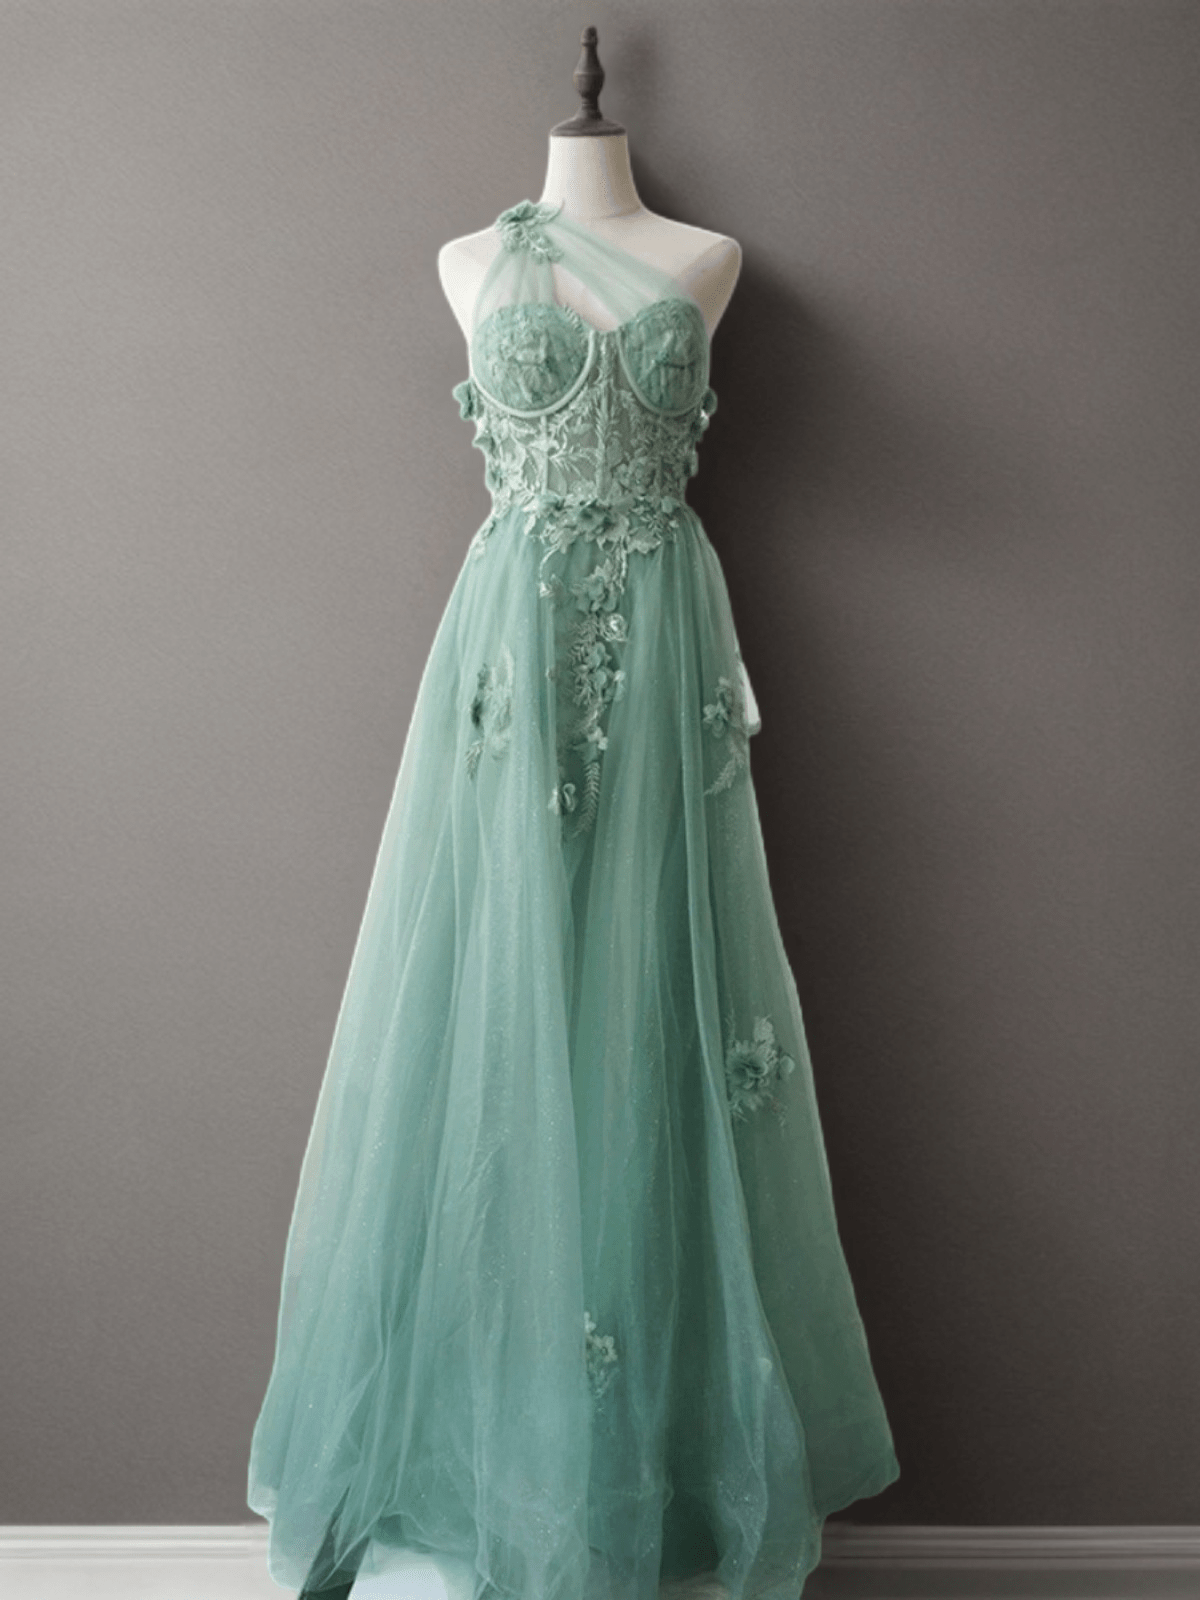 Mint Green Floral Applique Tulle Dress - Elegant One-Shoulder and Beaded Evening Gown Plus Size - WonderlandByLilian